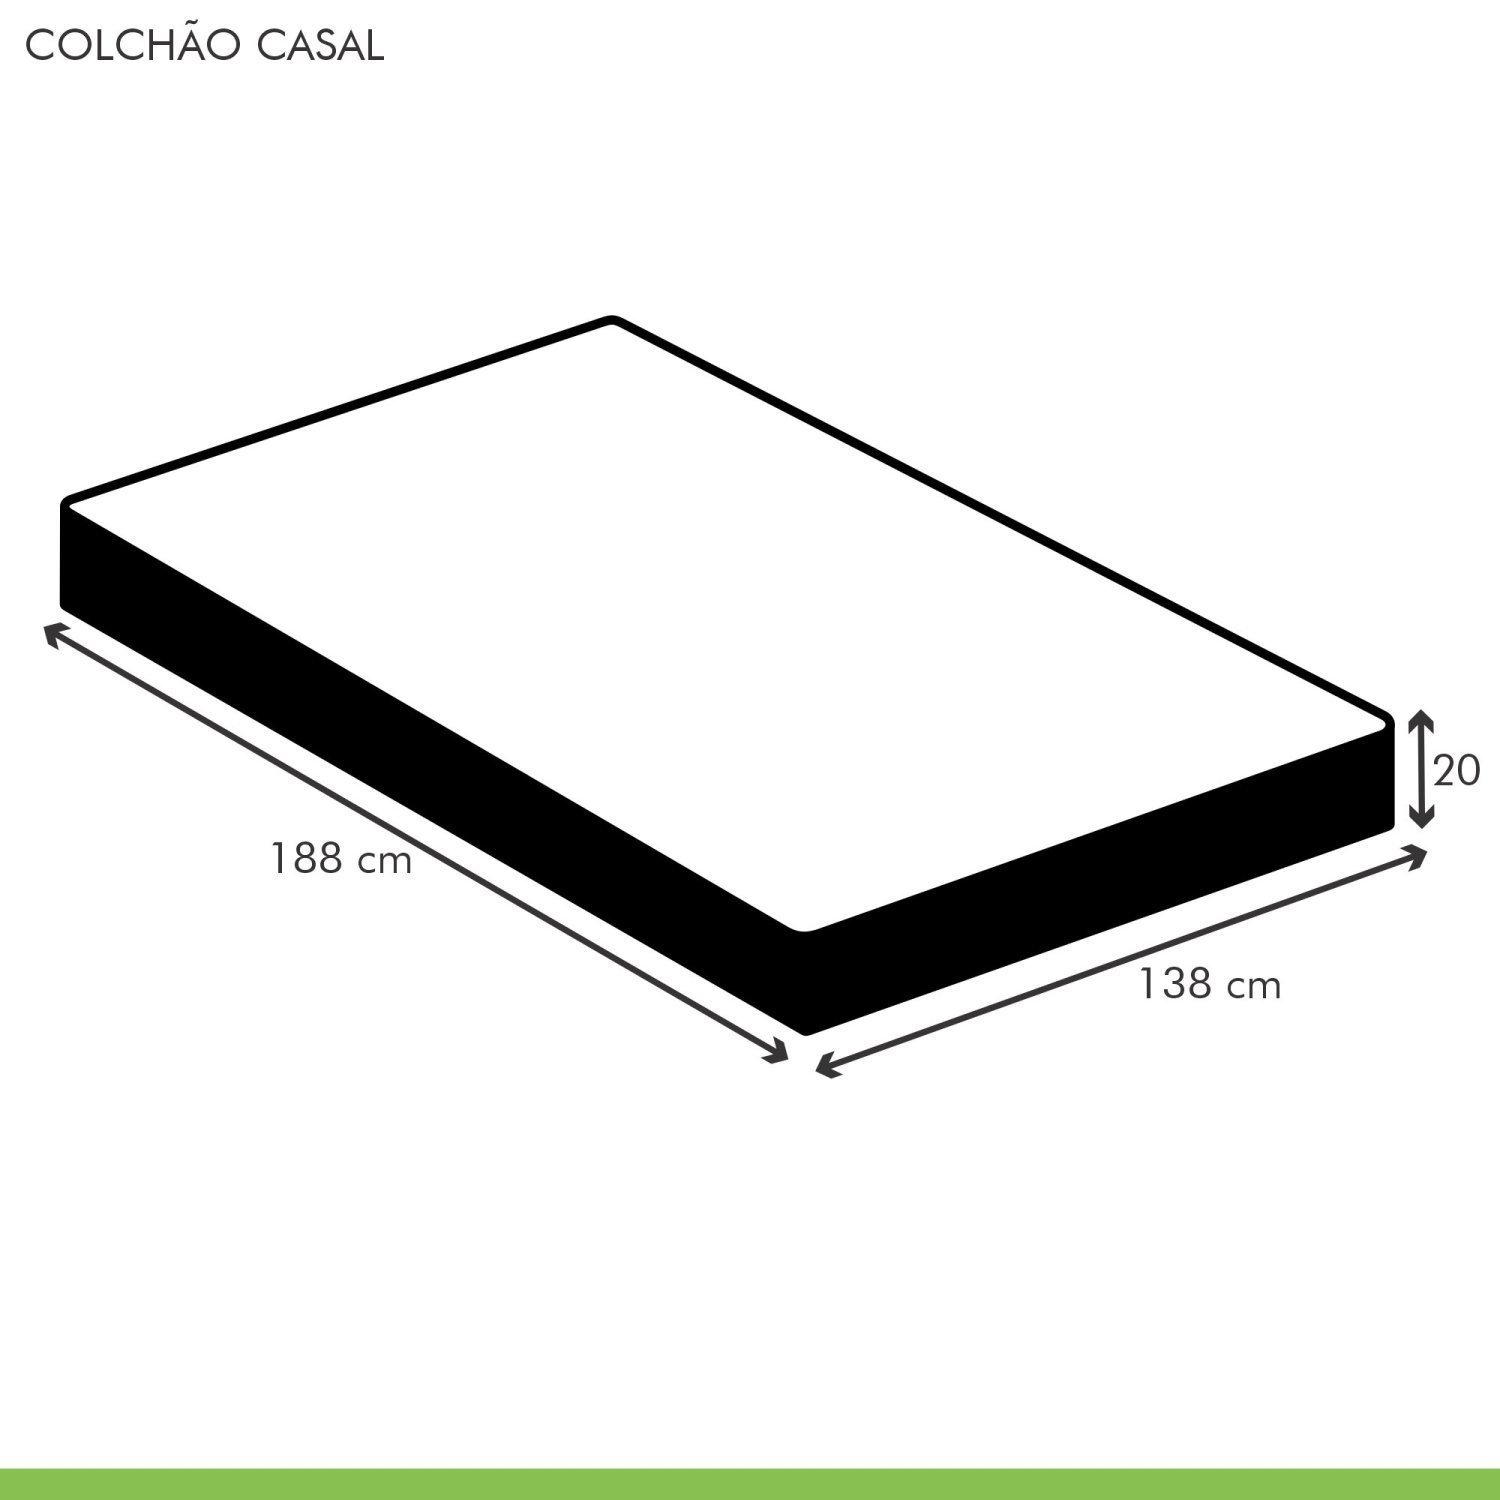 Colchão Casal Quality Plus Duoface 20x138x188cm  - 5